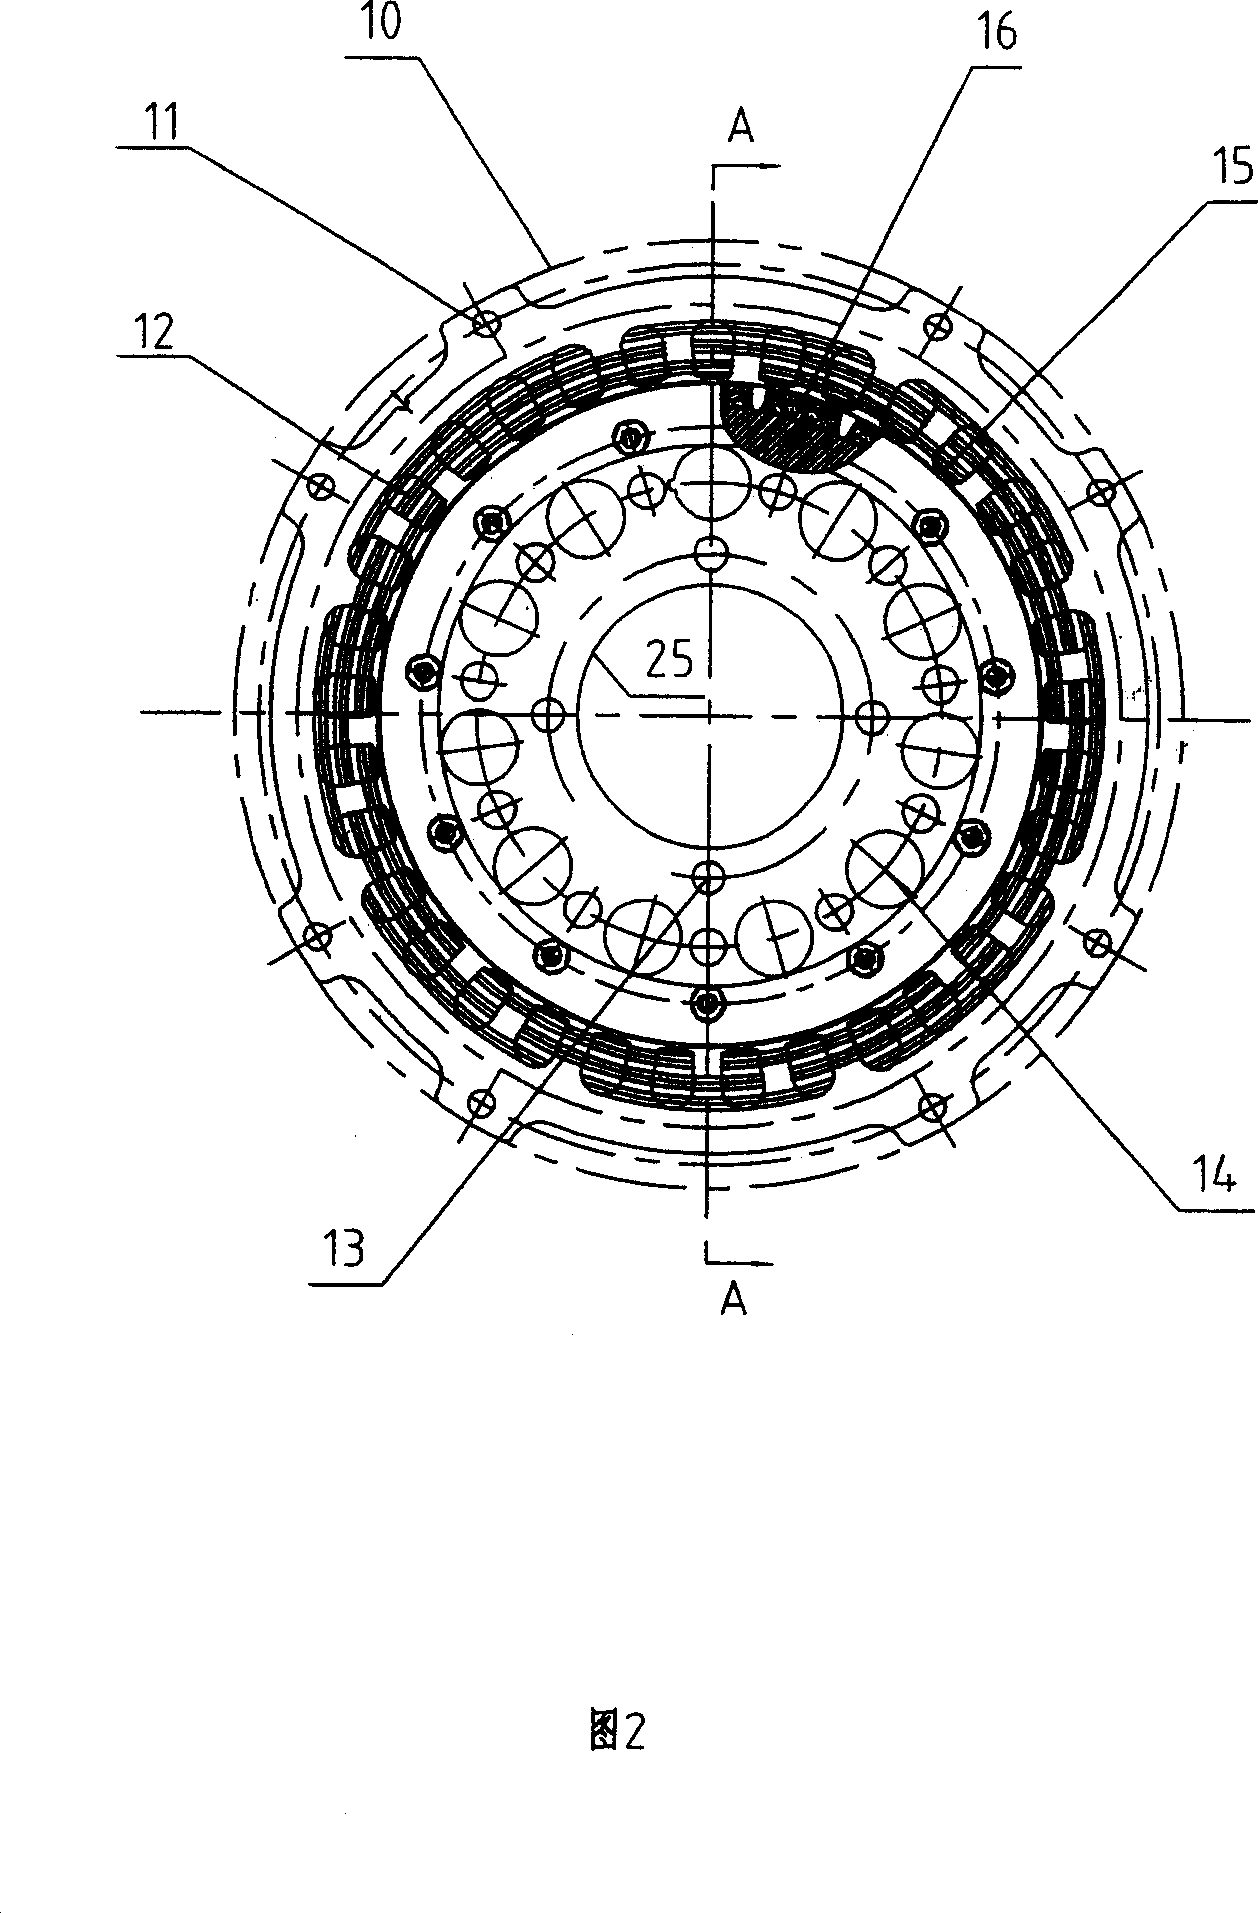 Stator of multipole internal rotor permanent magnet generator